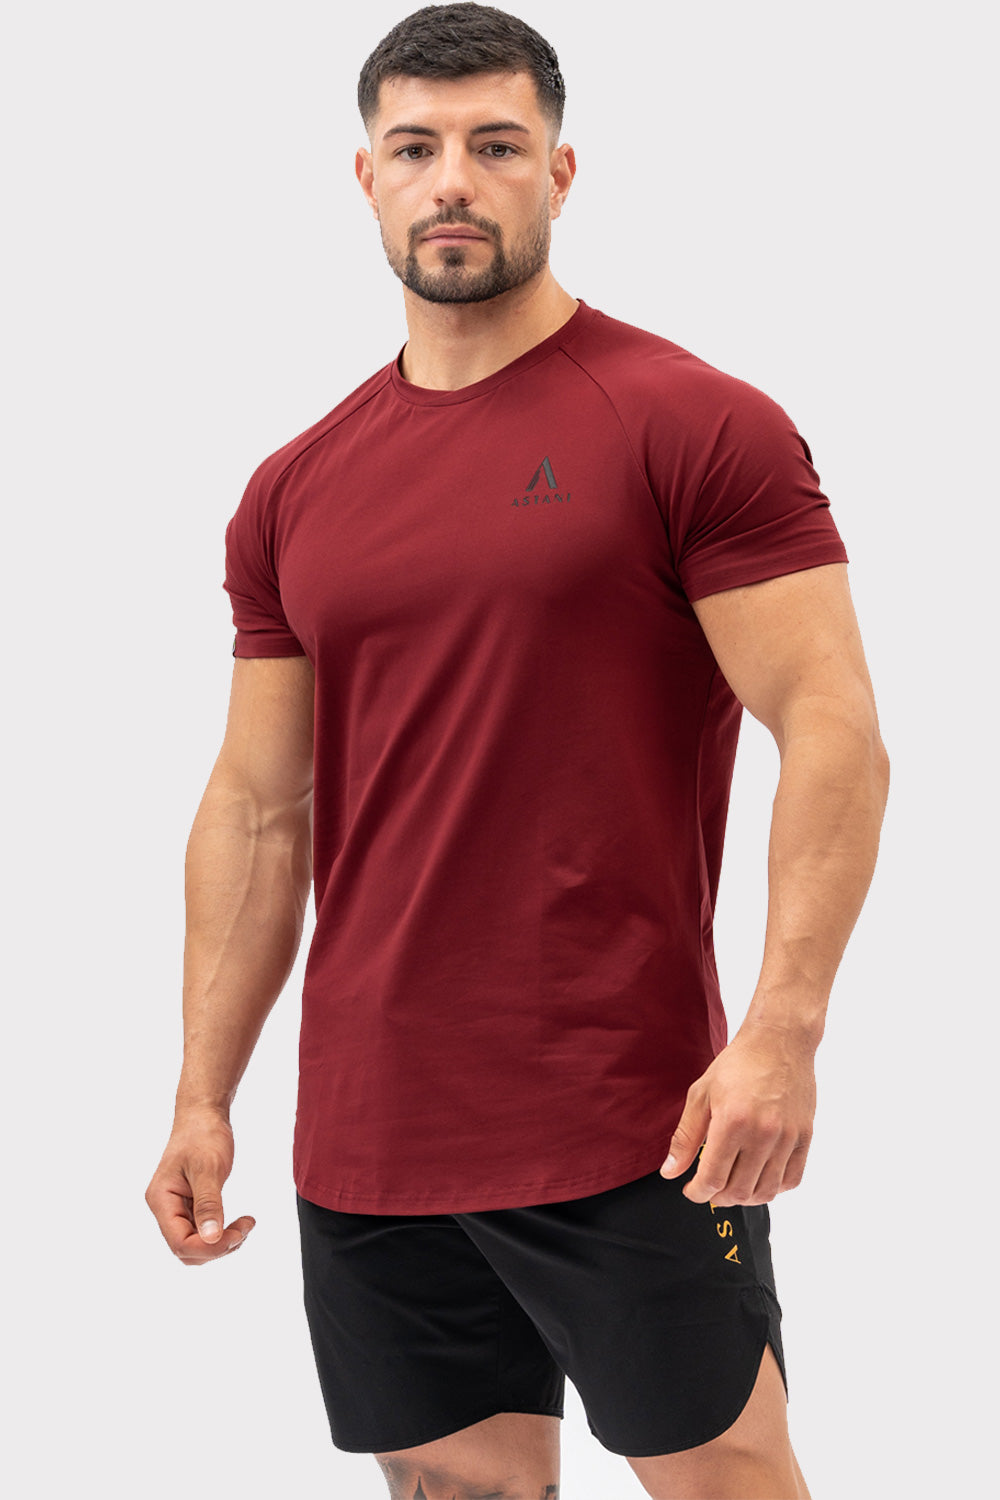 A CODE T-Shirt - Burdeos  